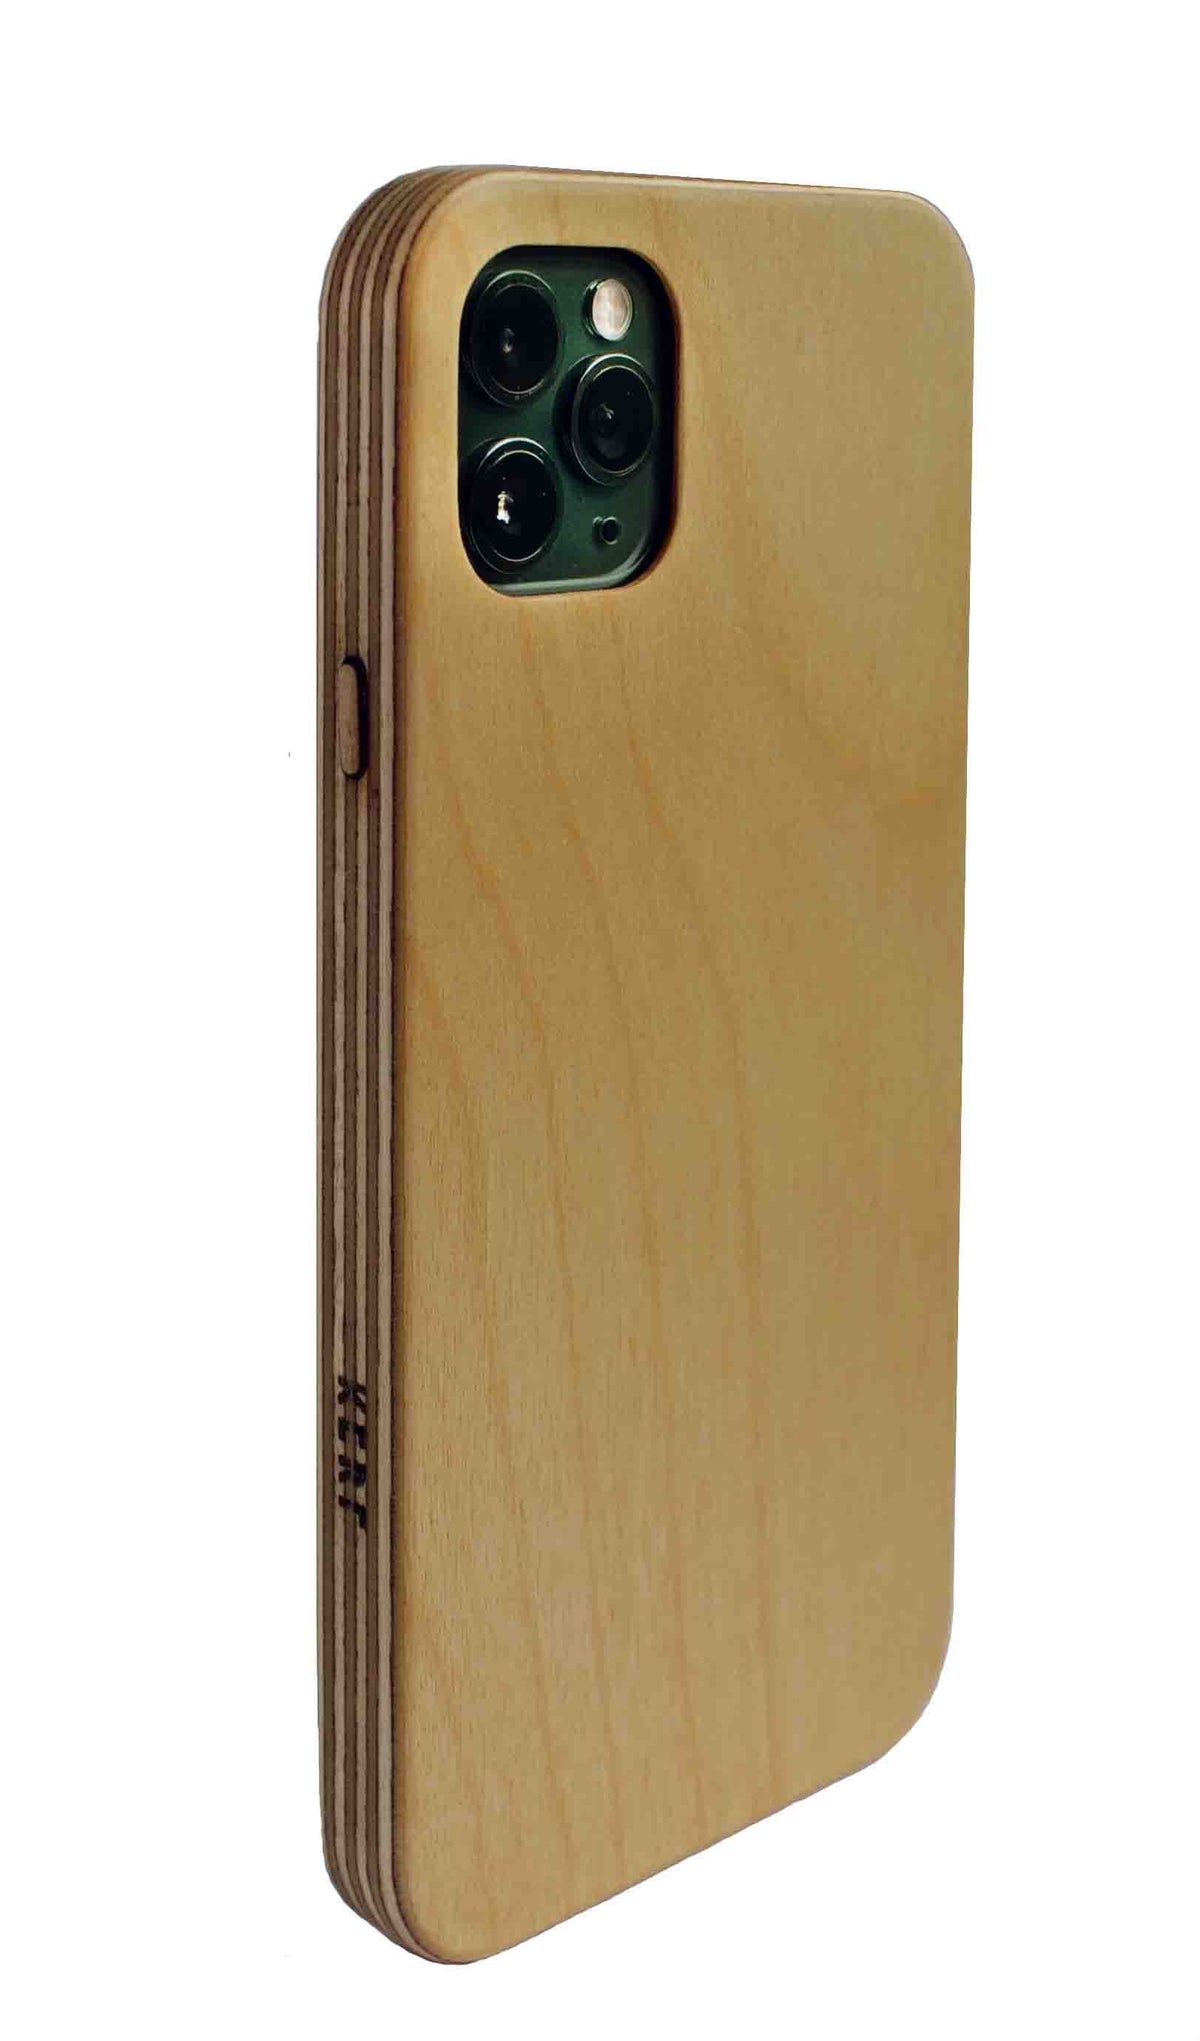 Plywood iPhone 12 Case